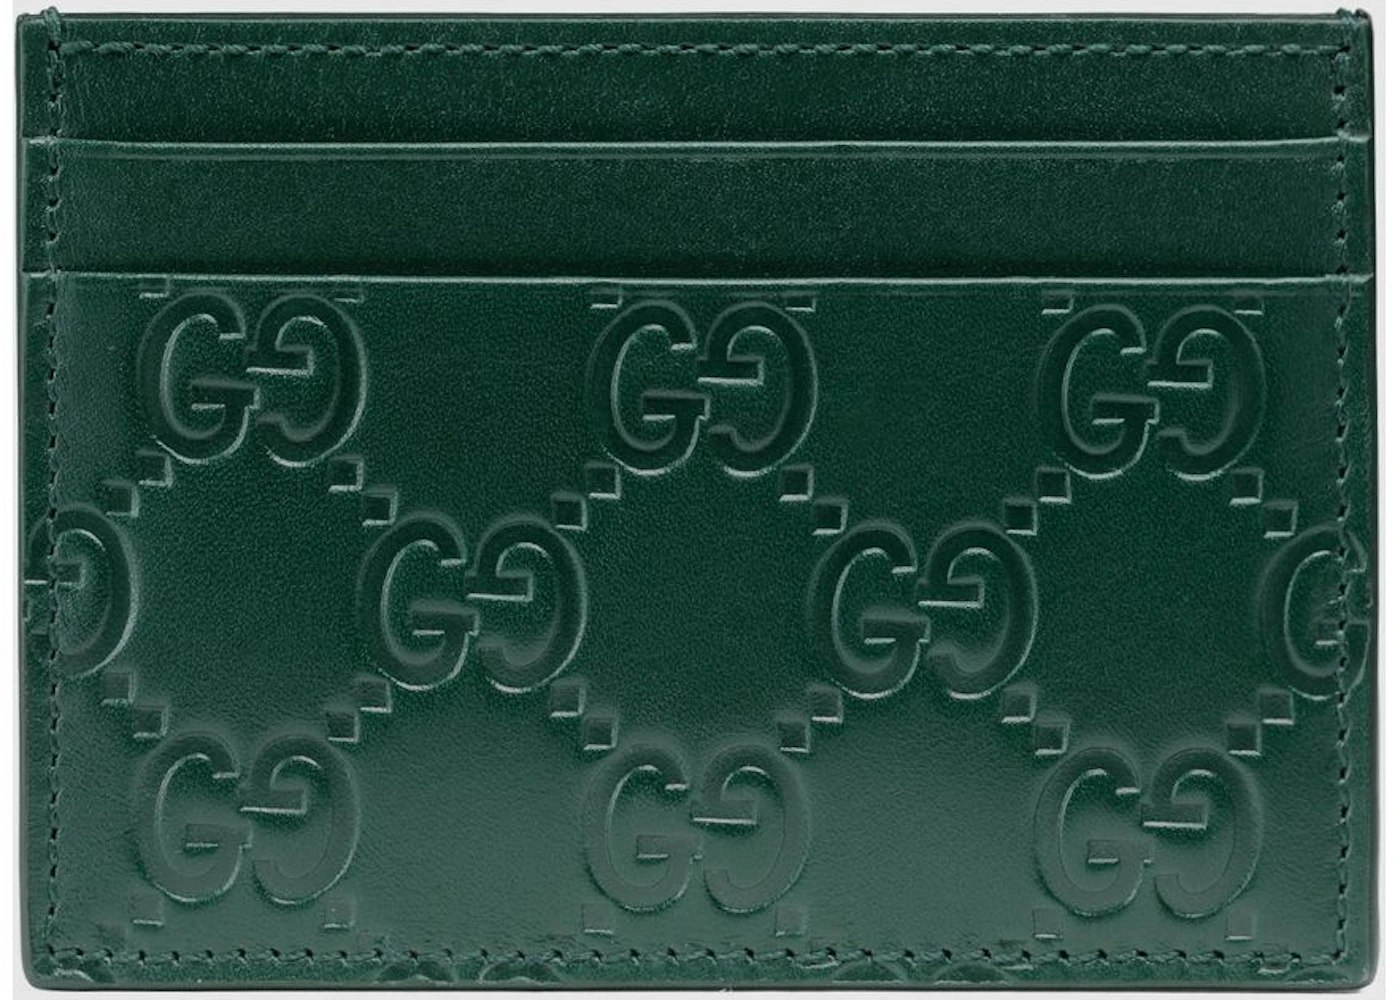 SOLD*NIB Gucci Money Clip Card Case Green Leather